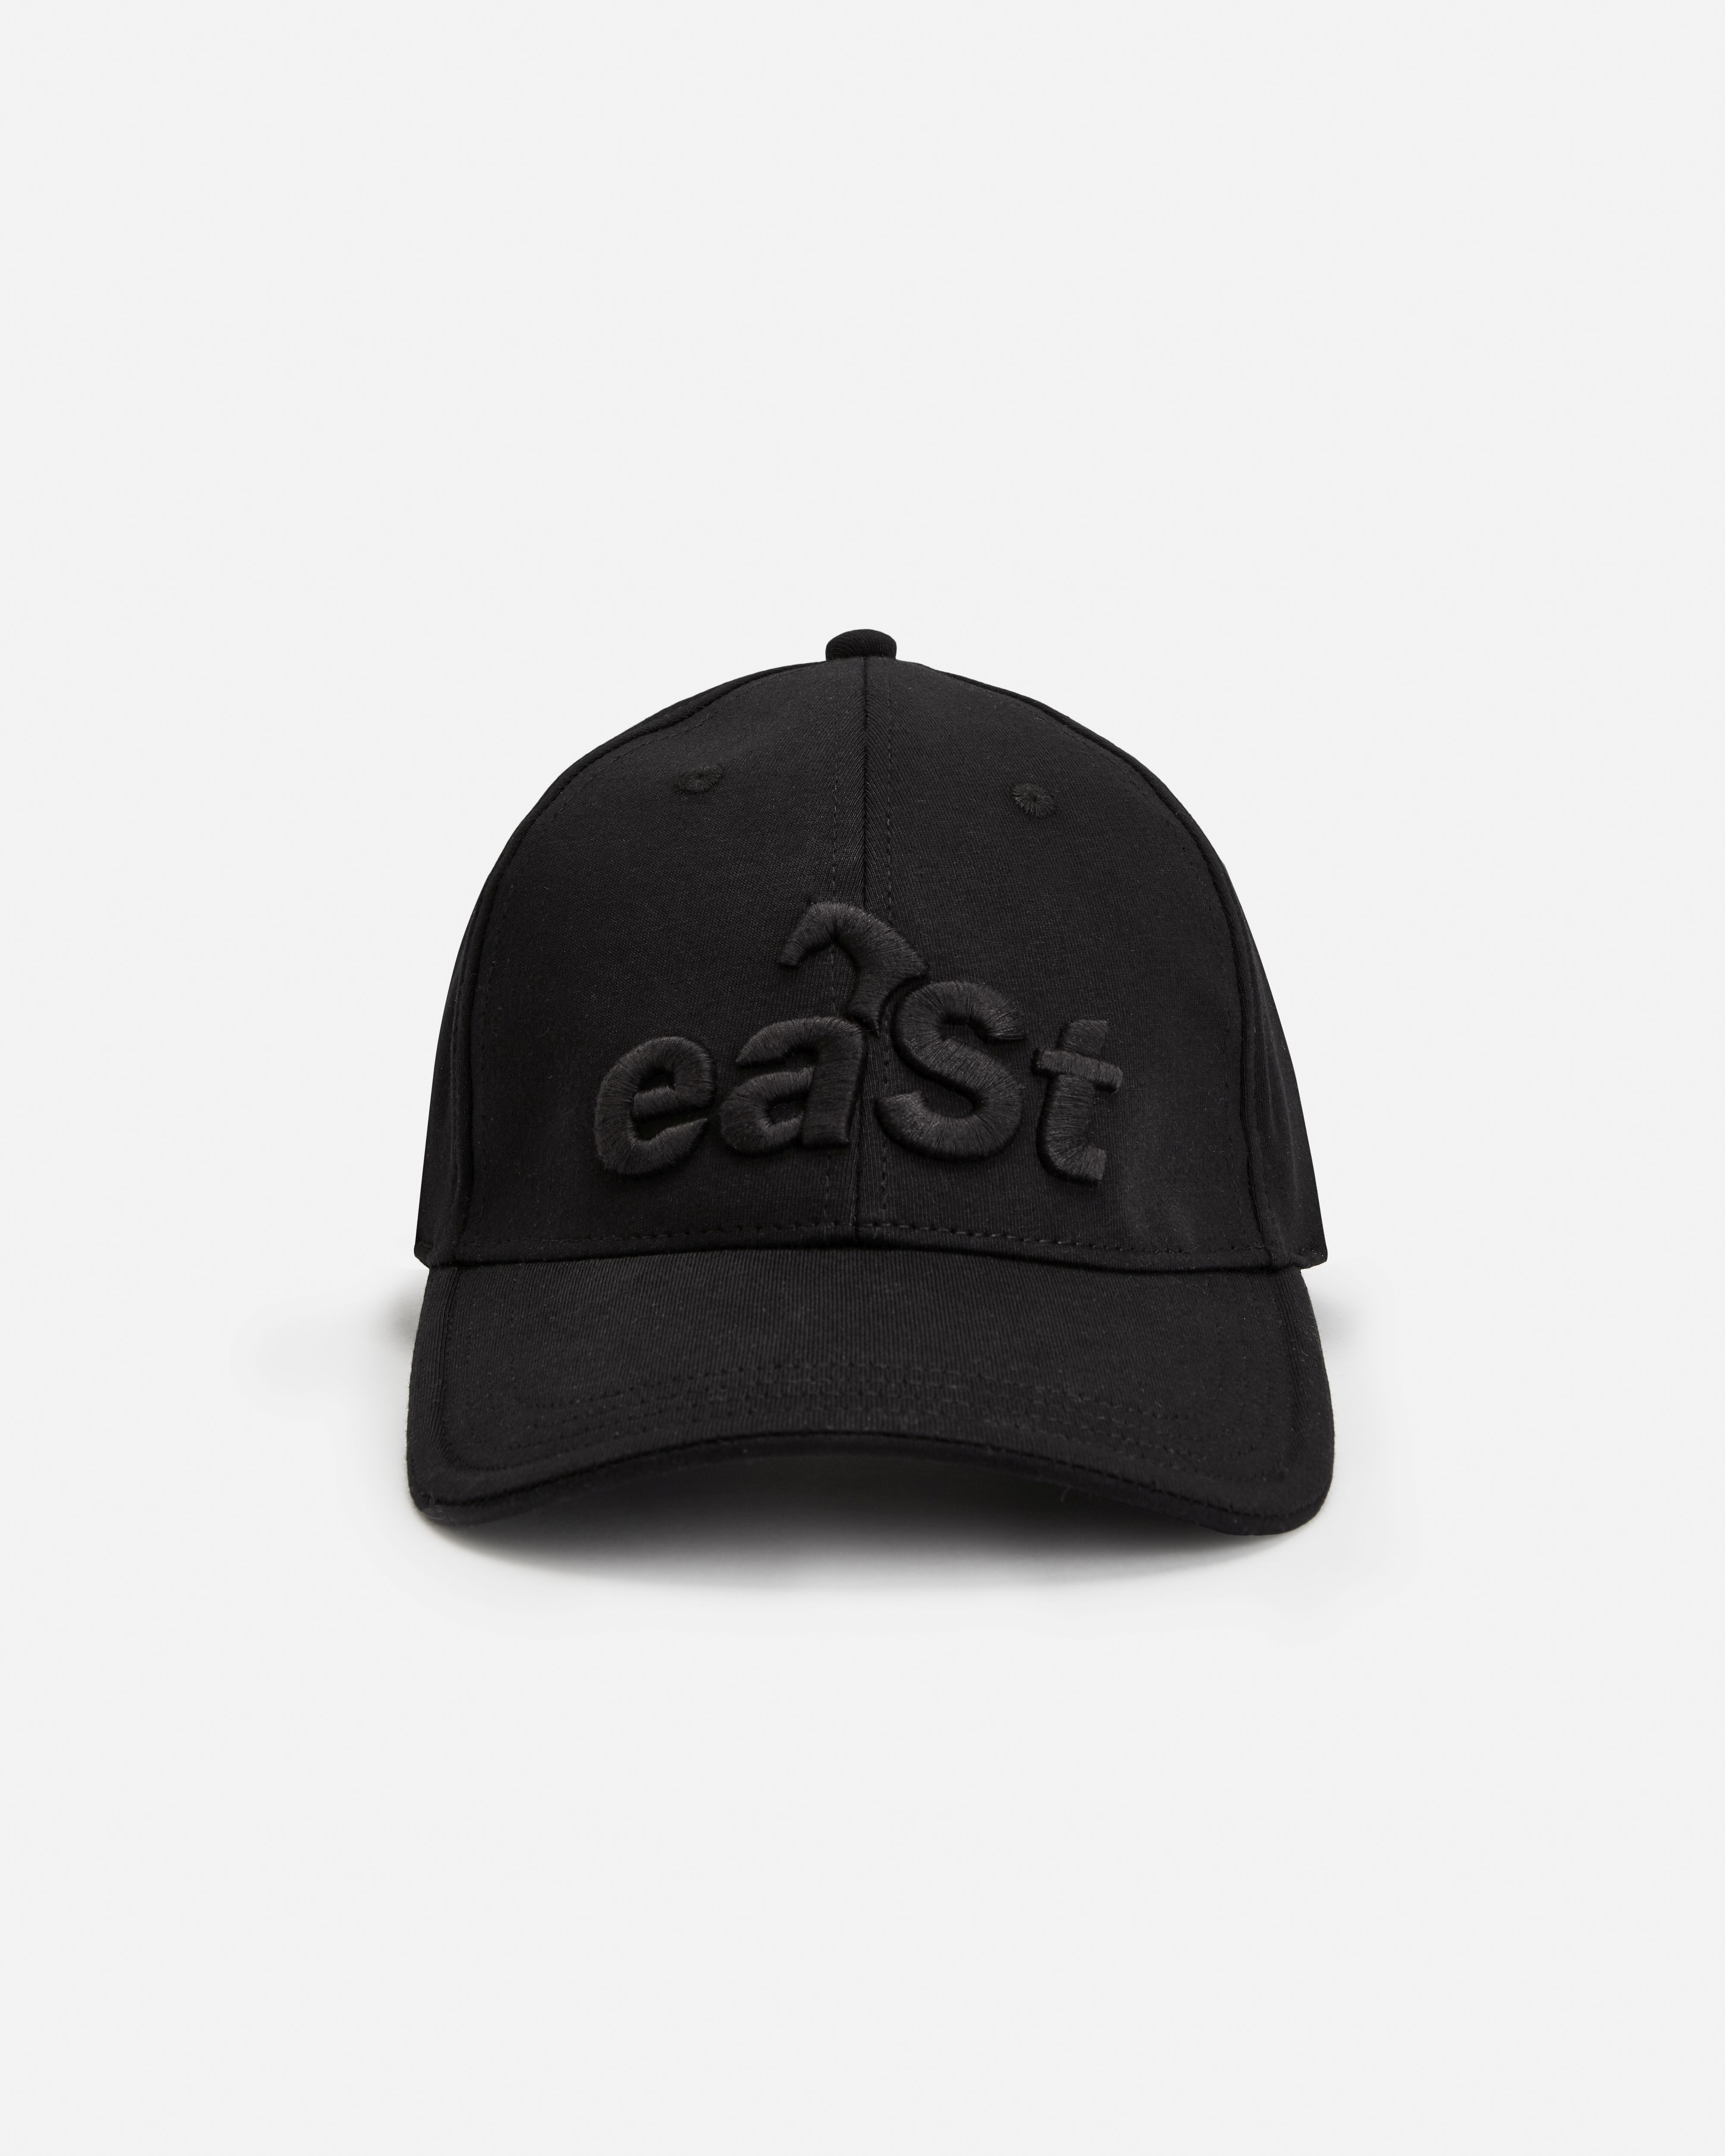 eaSt Cap | Black | one size